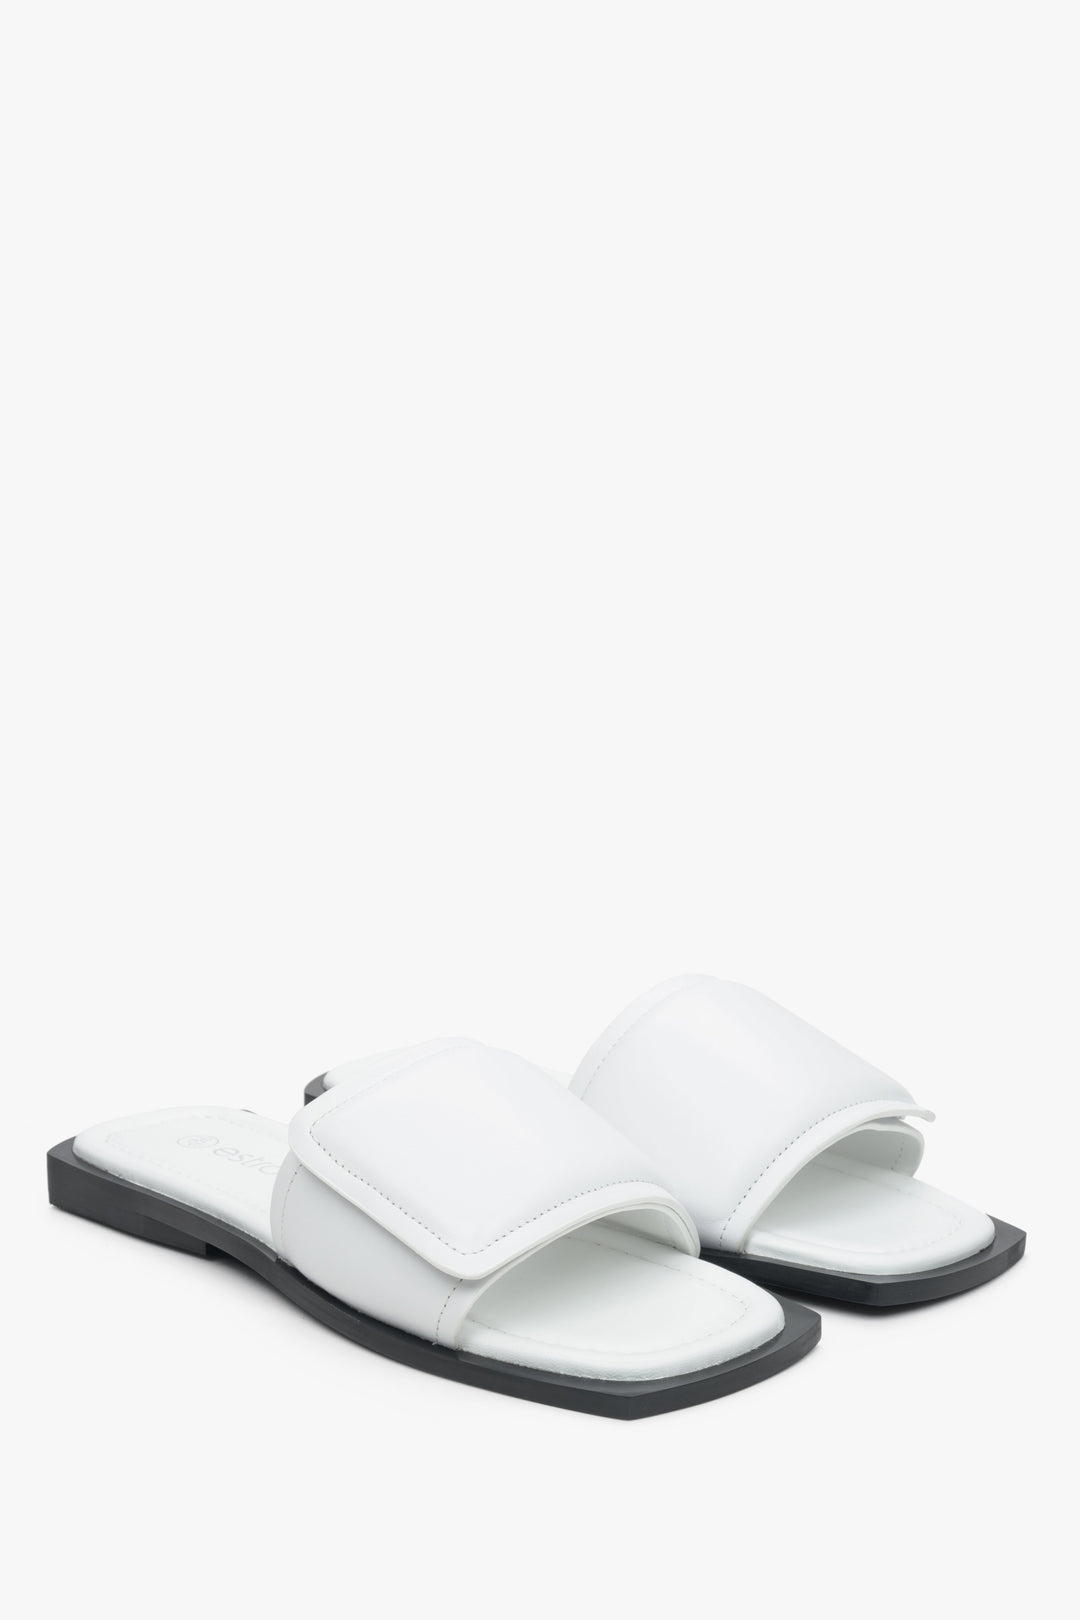 White leather flat slide sandals Estro - shoe profile.